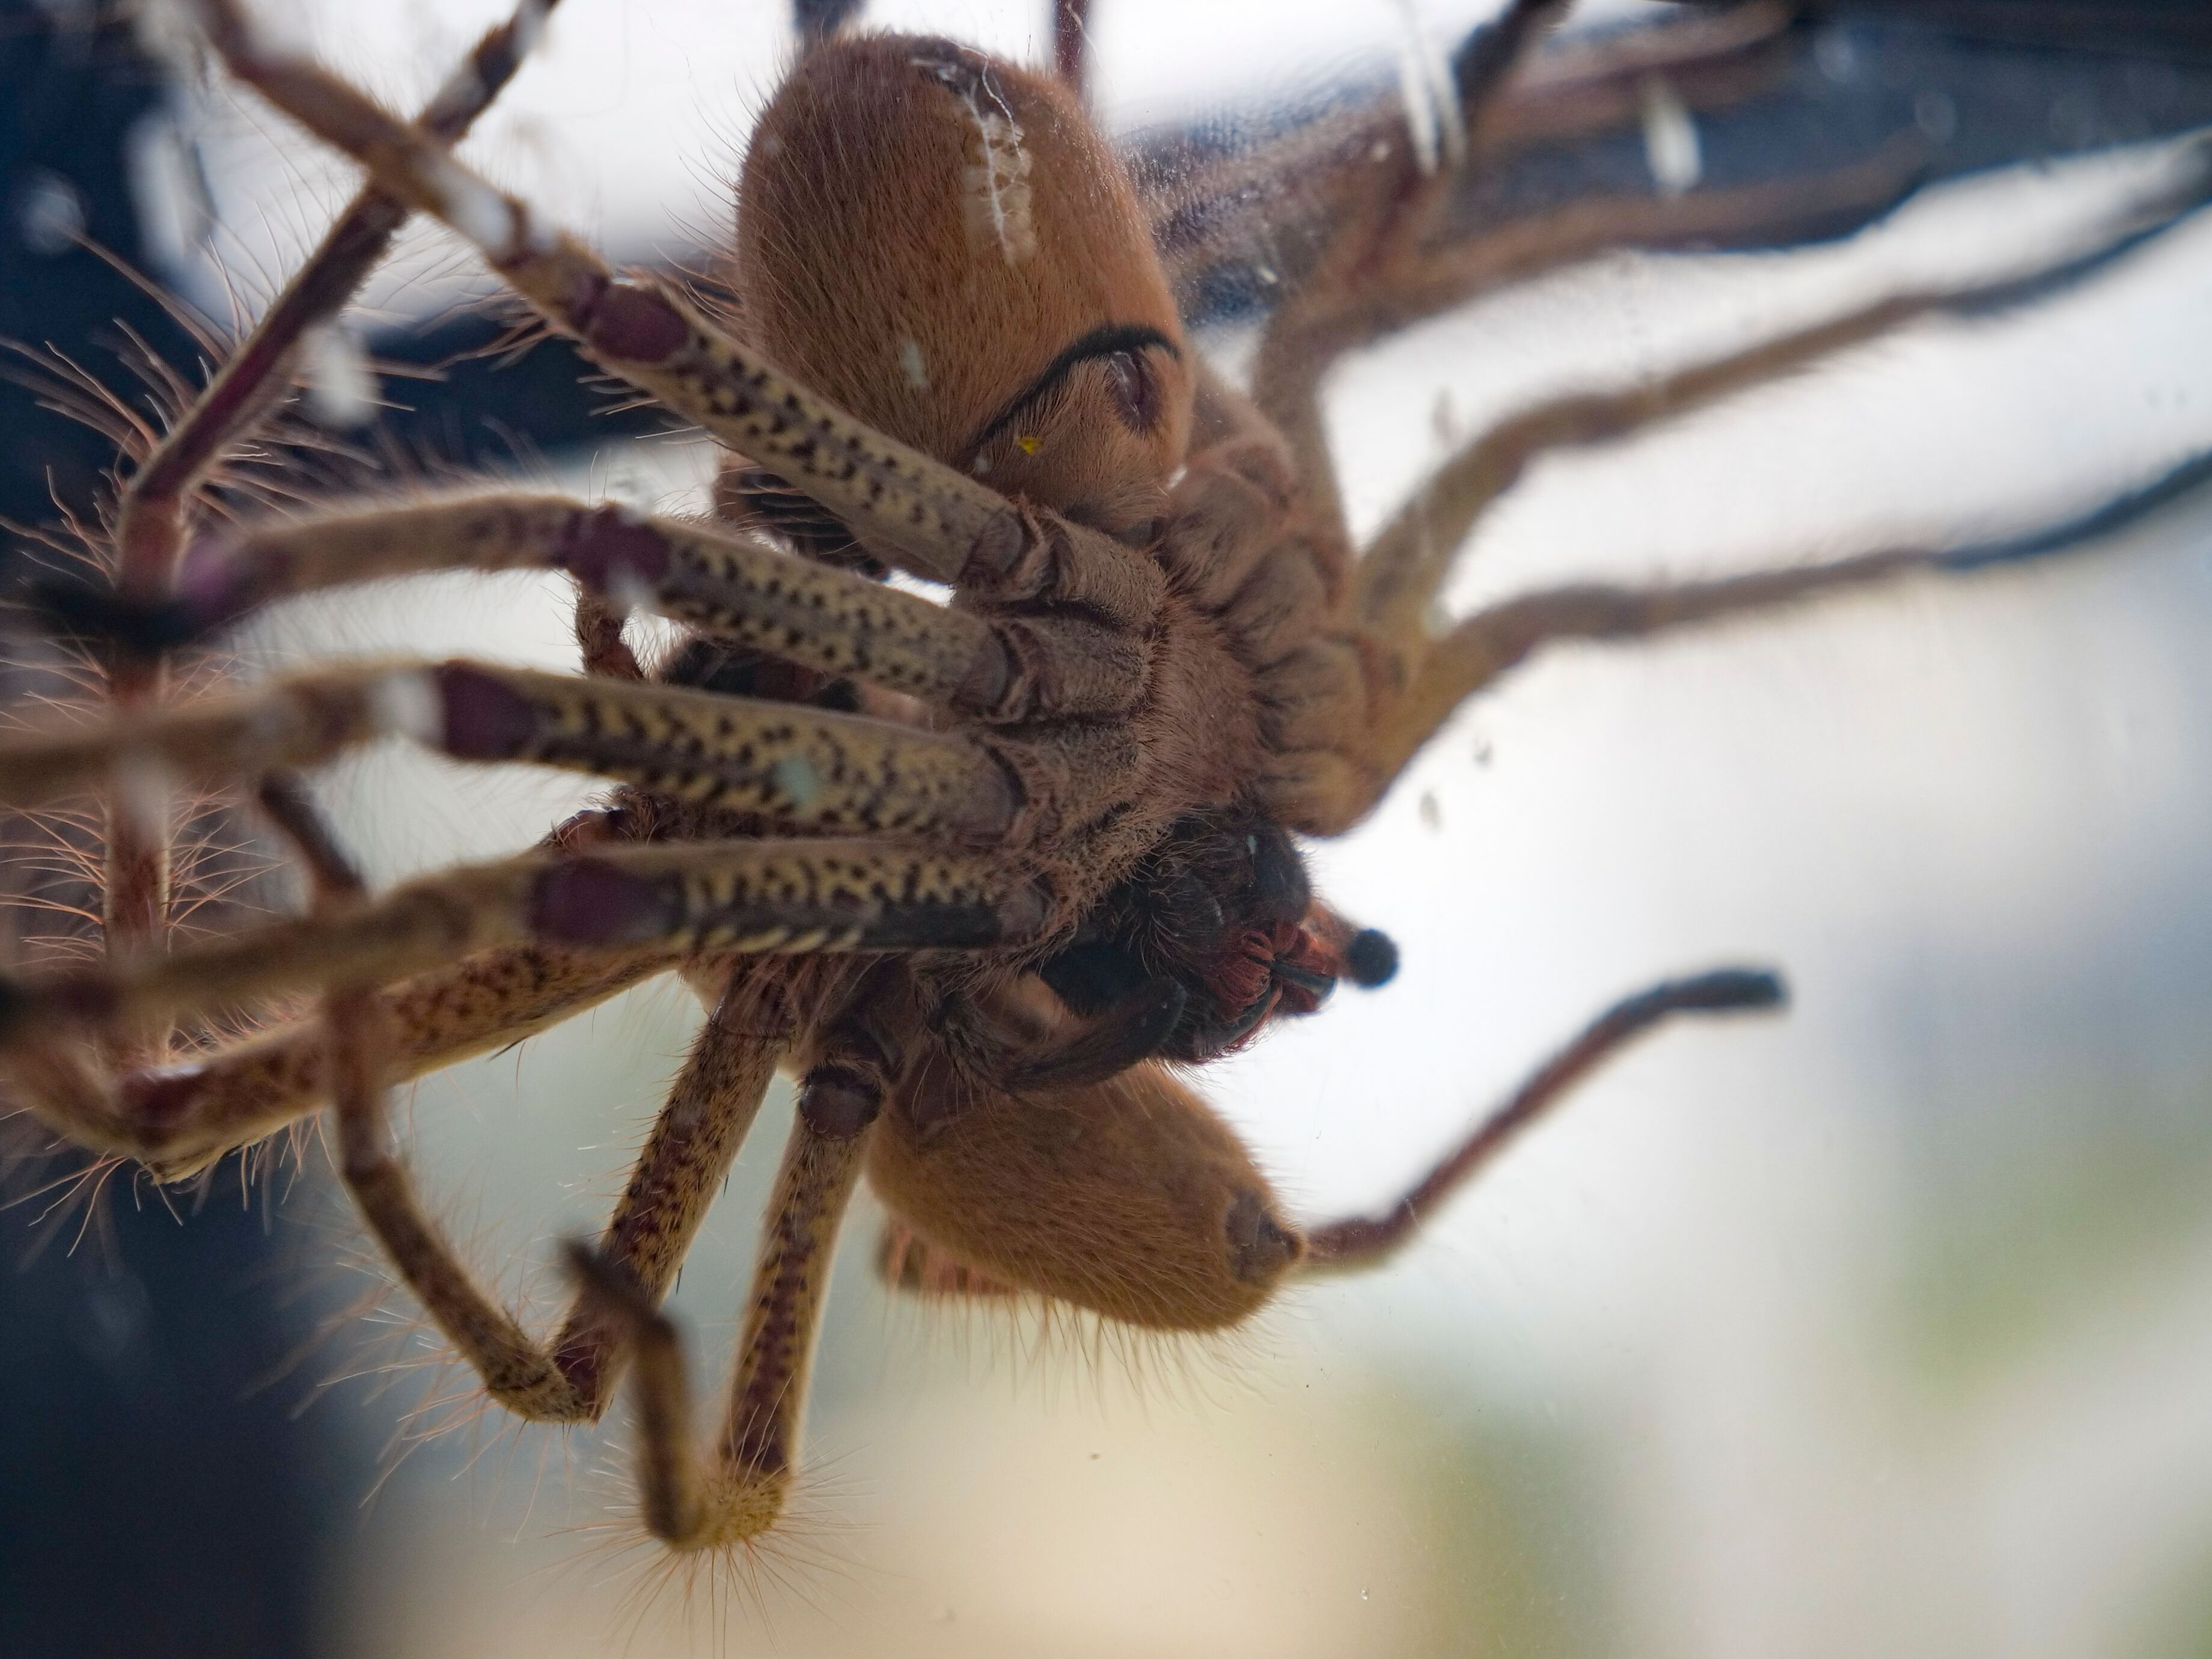 Mating Habits Of Australias Golden Huntsman Spider Captured In Rare Photos Sbs News 8367